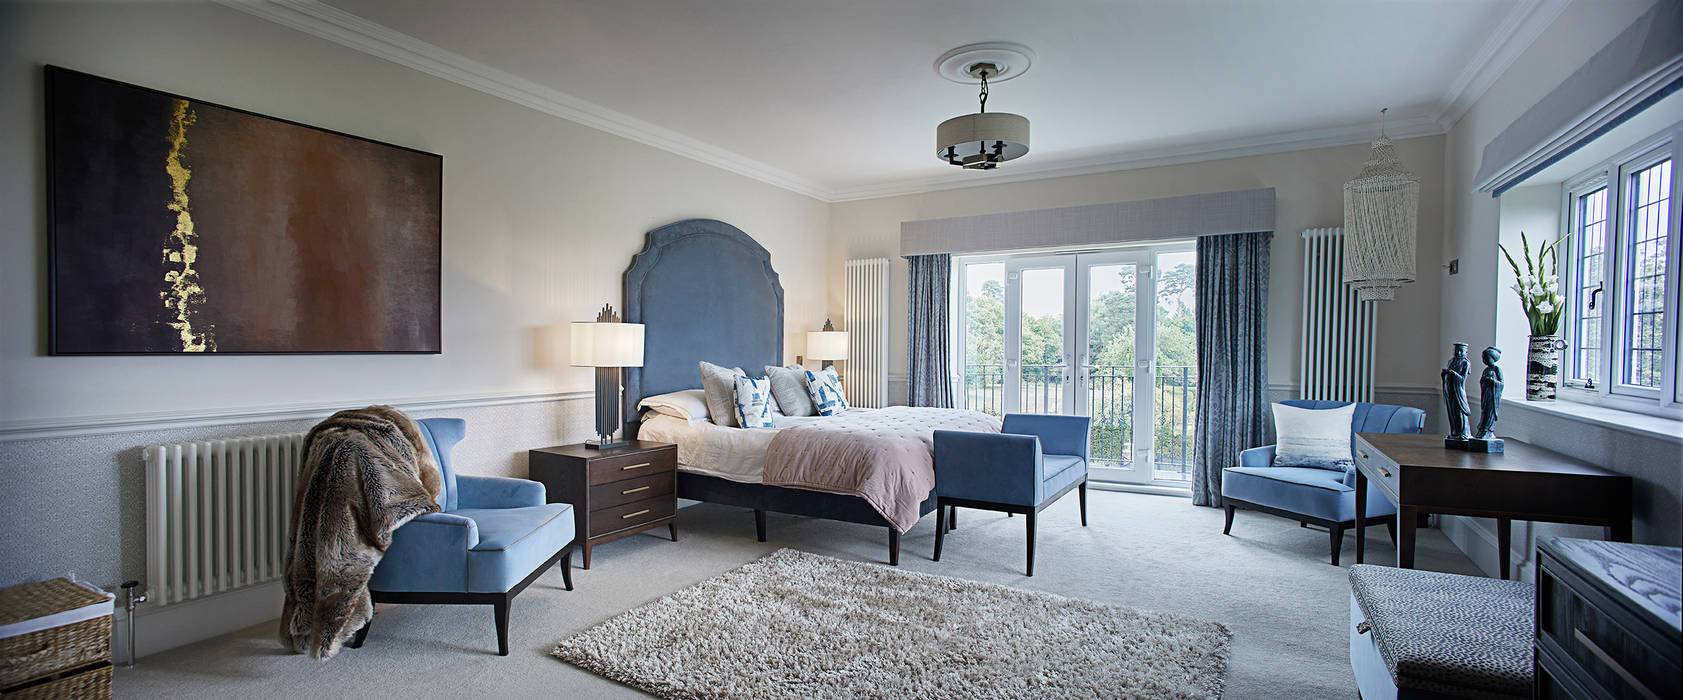 Relocating to the Country Niki Schafer Interior Design Master bedroom Blue headboard,bluebedroom,masterbedroom